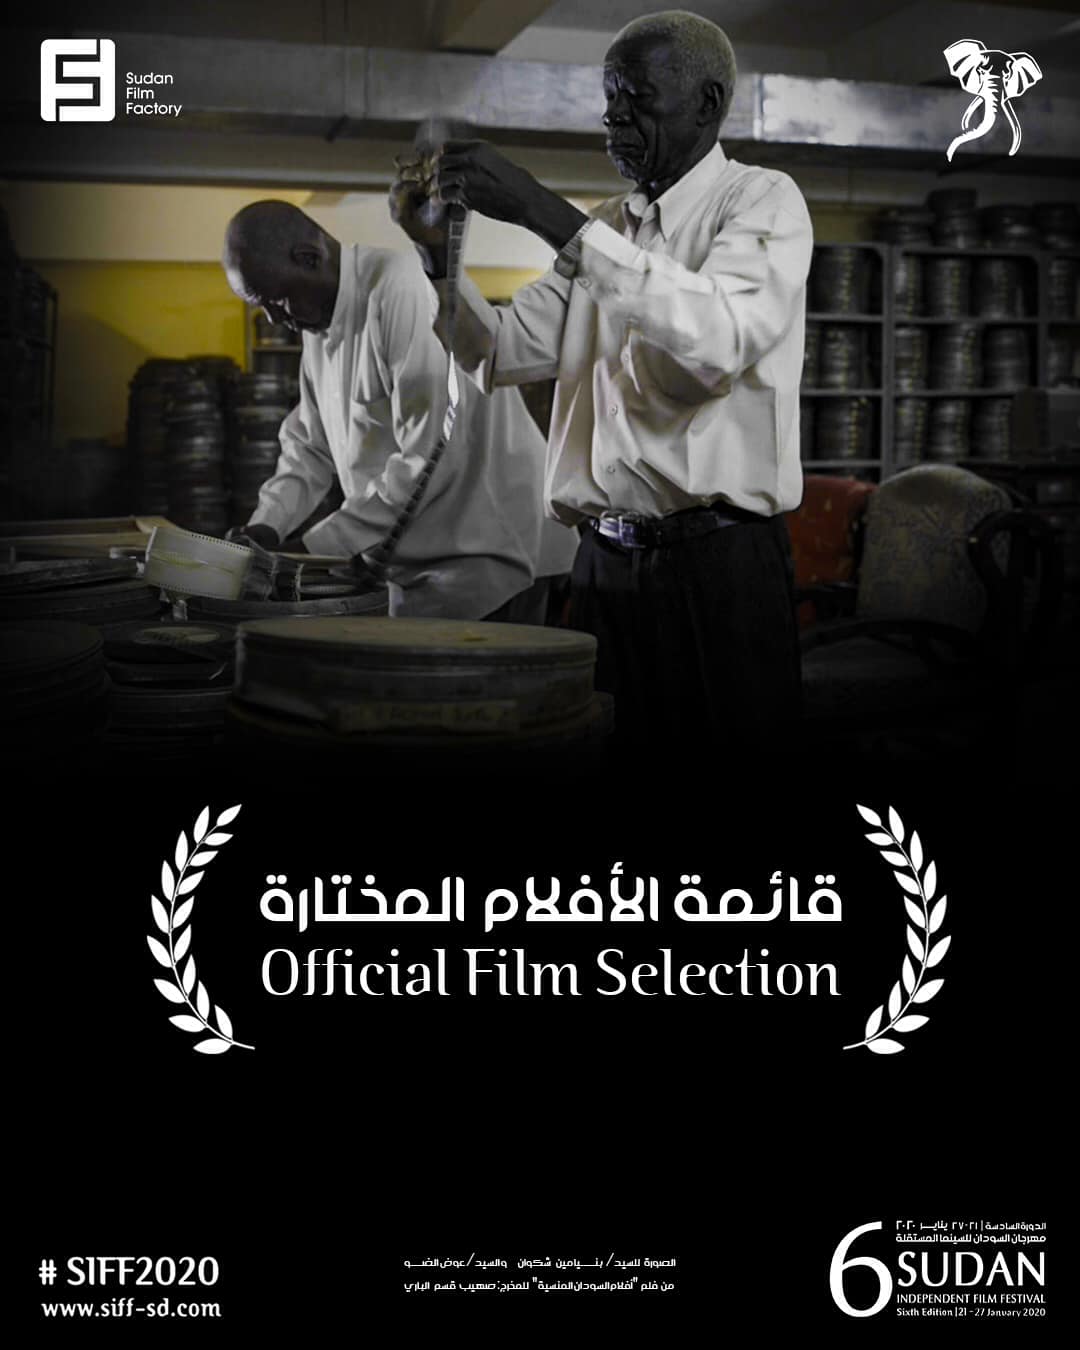 Films Selection